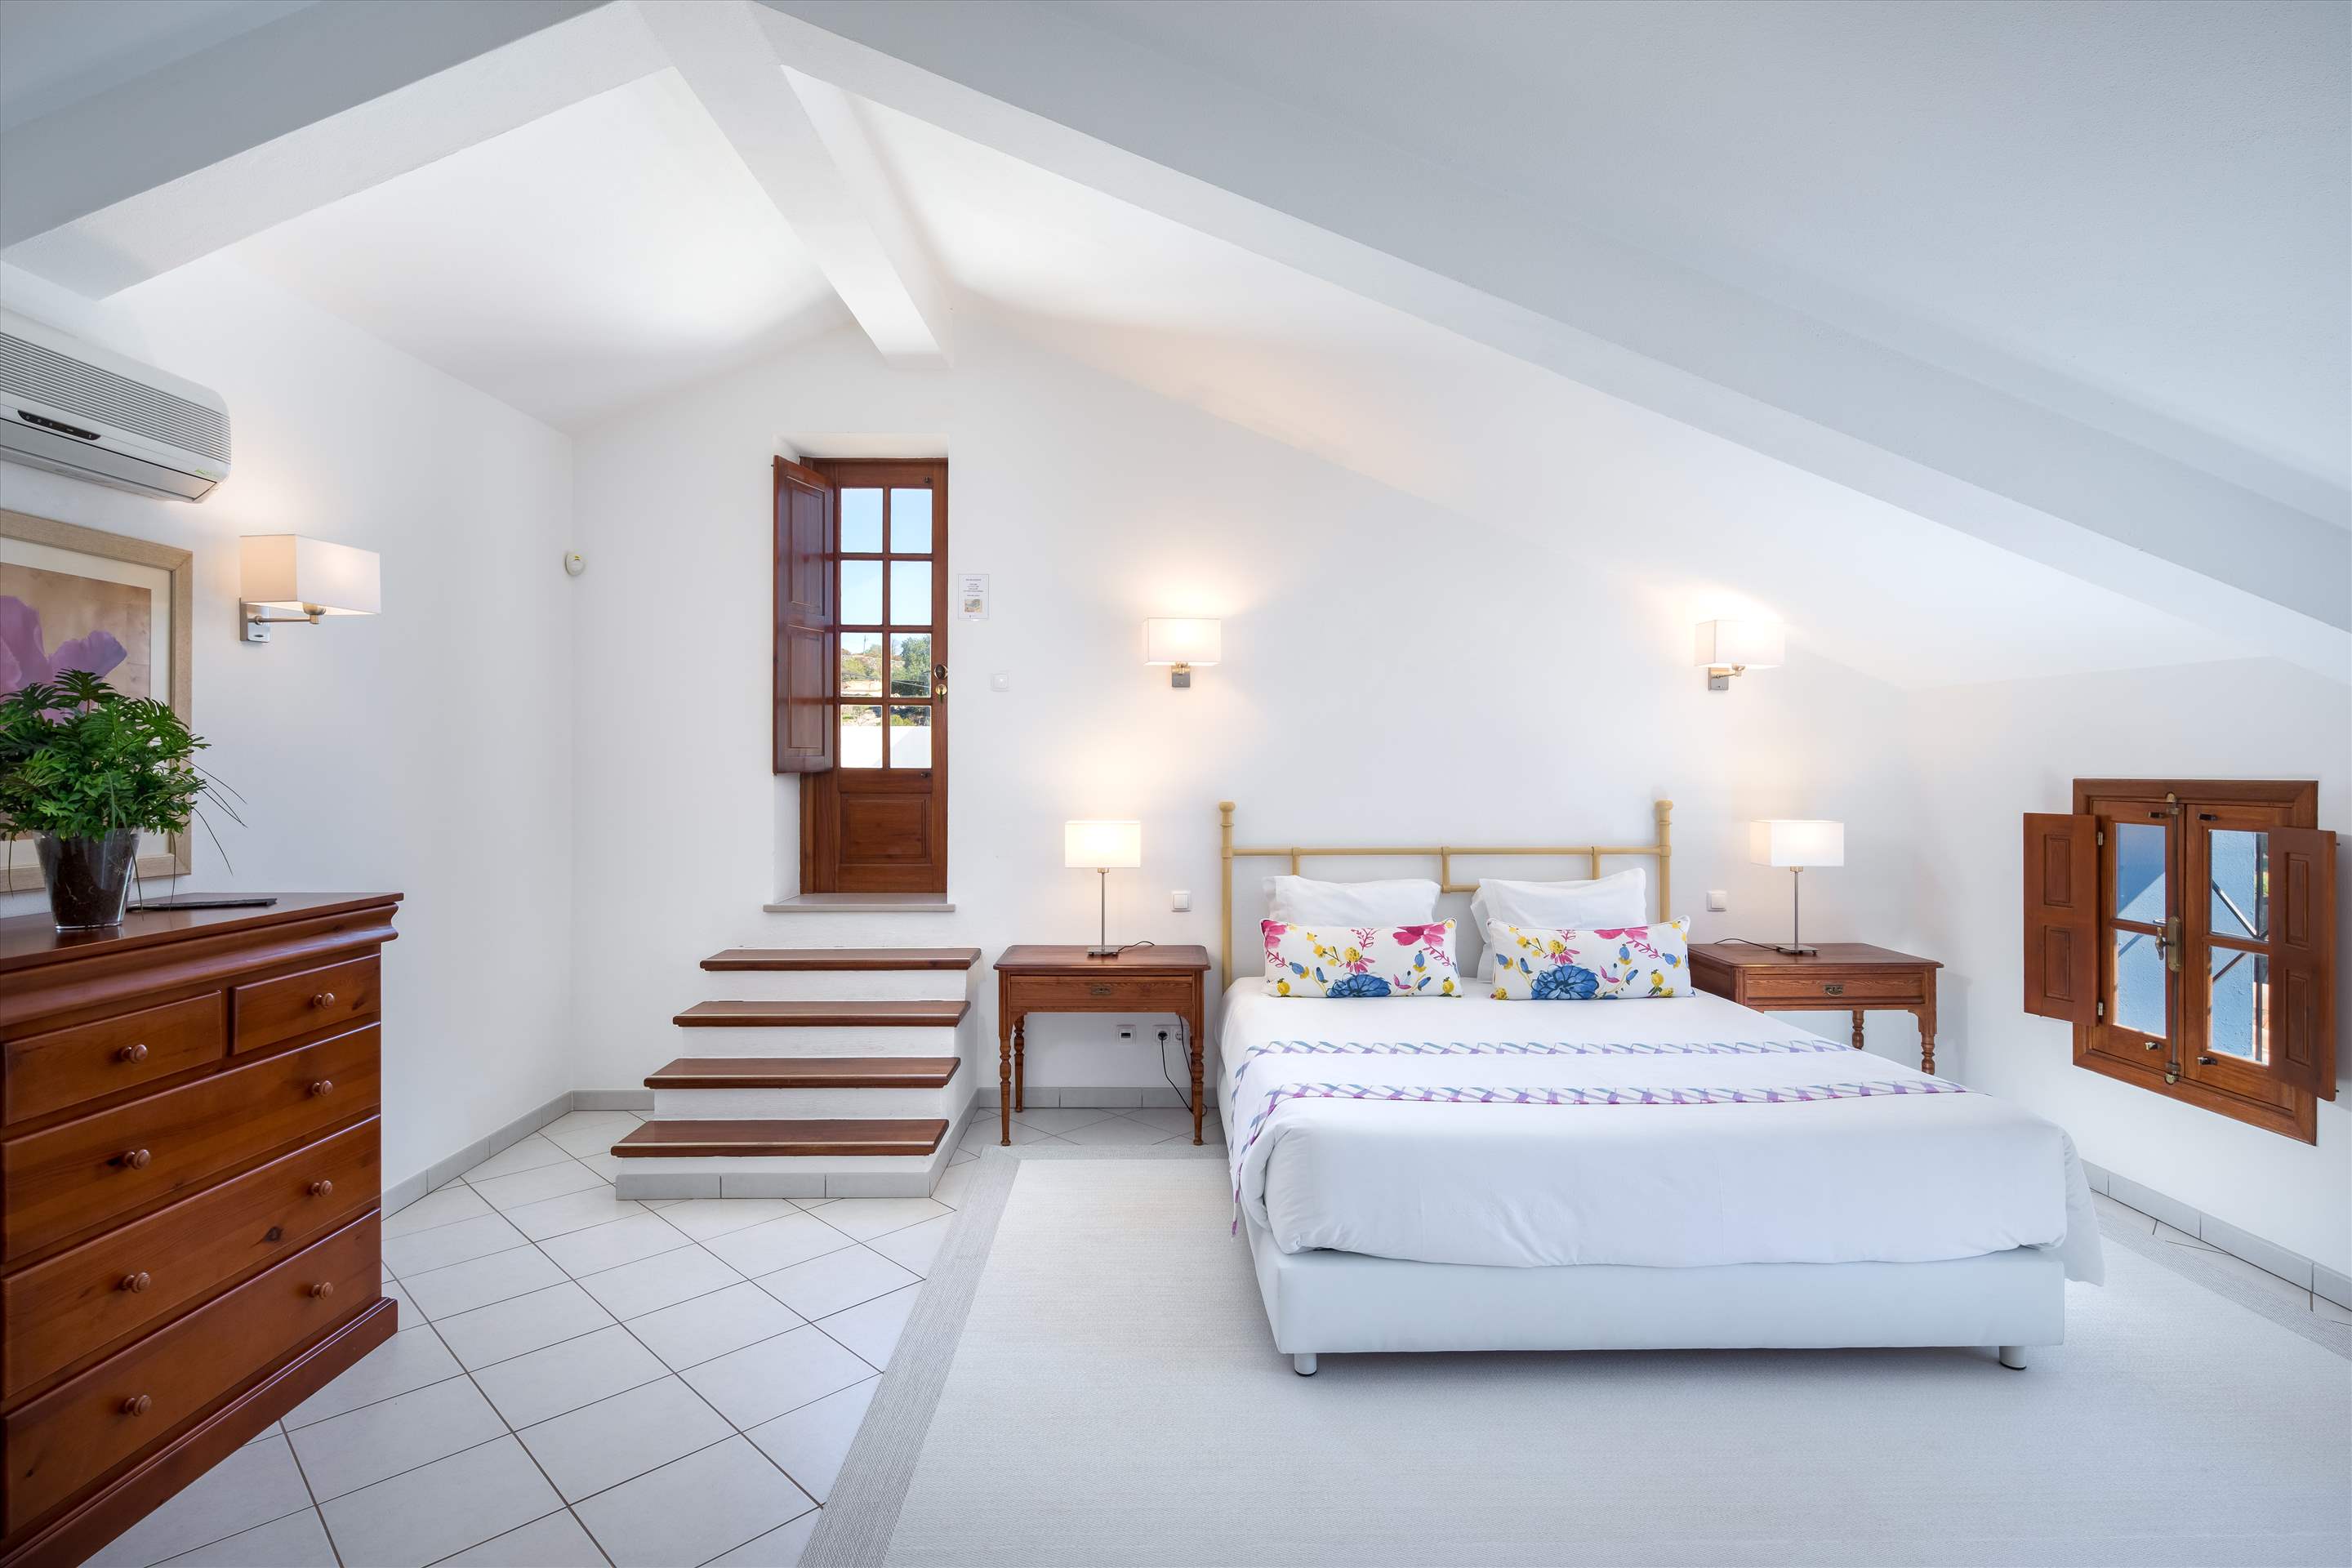 Casa do Ingles, 7-10 persons, 4 bedroom villa in Vilamoura Area, Algarve Photo #10